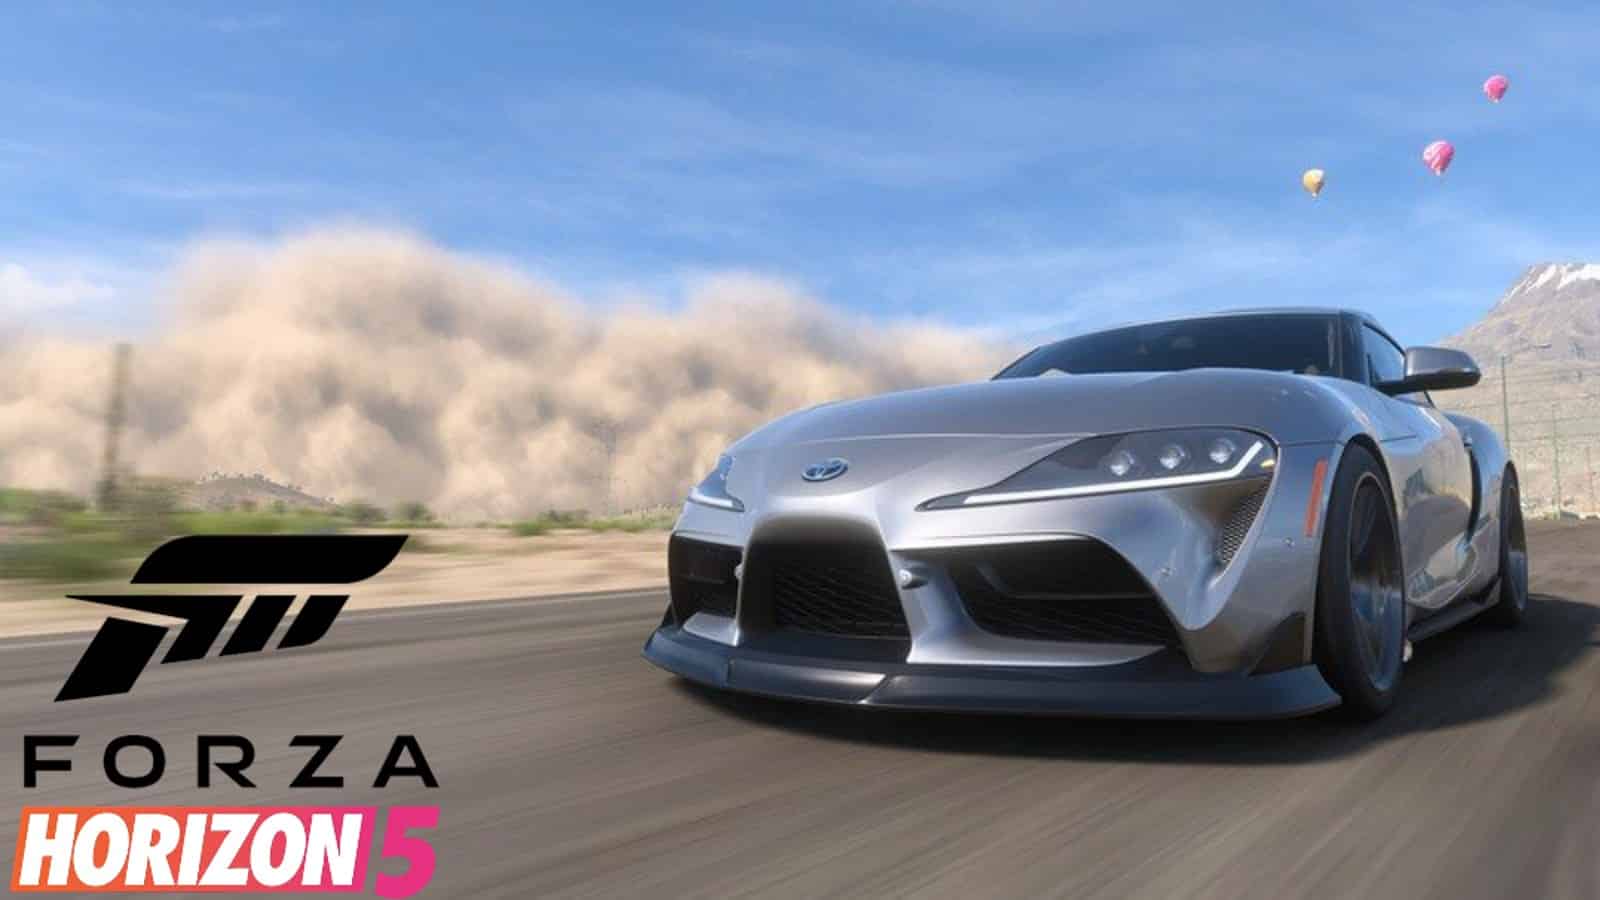 Car racing down a dirt road in Forza Horizon 5